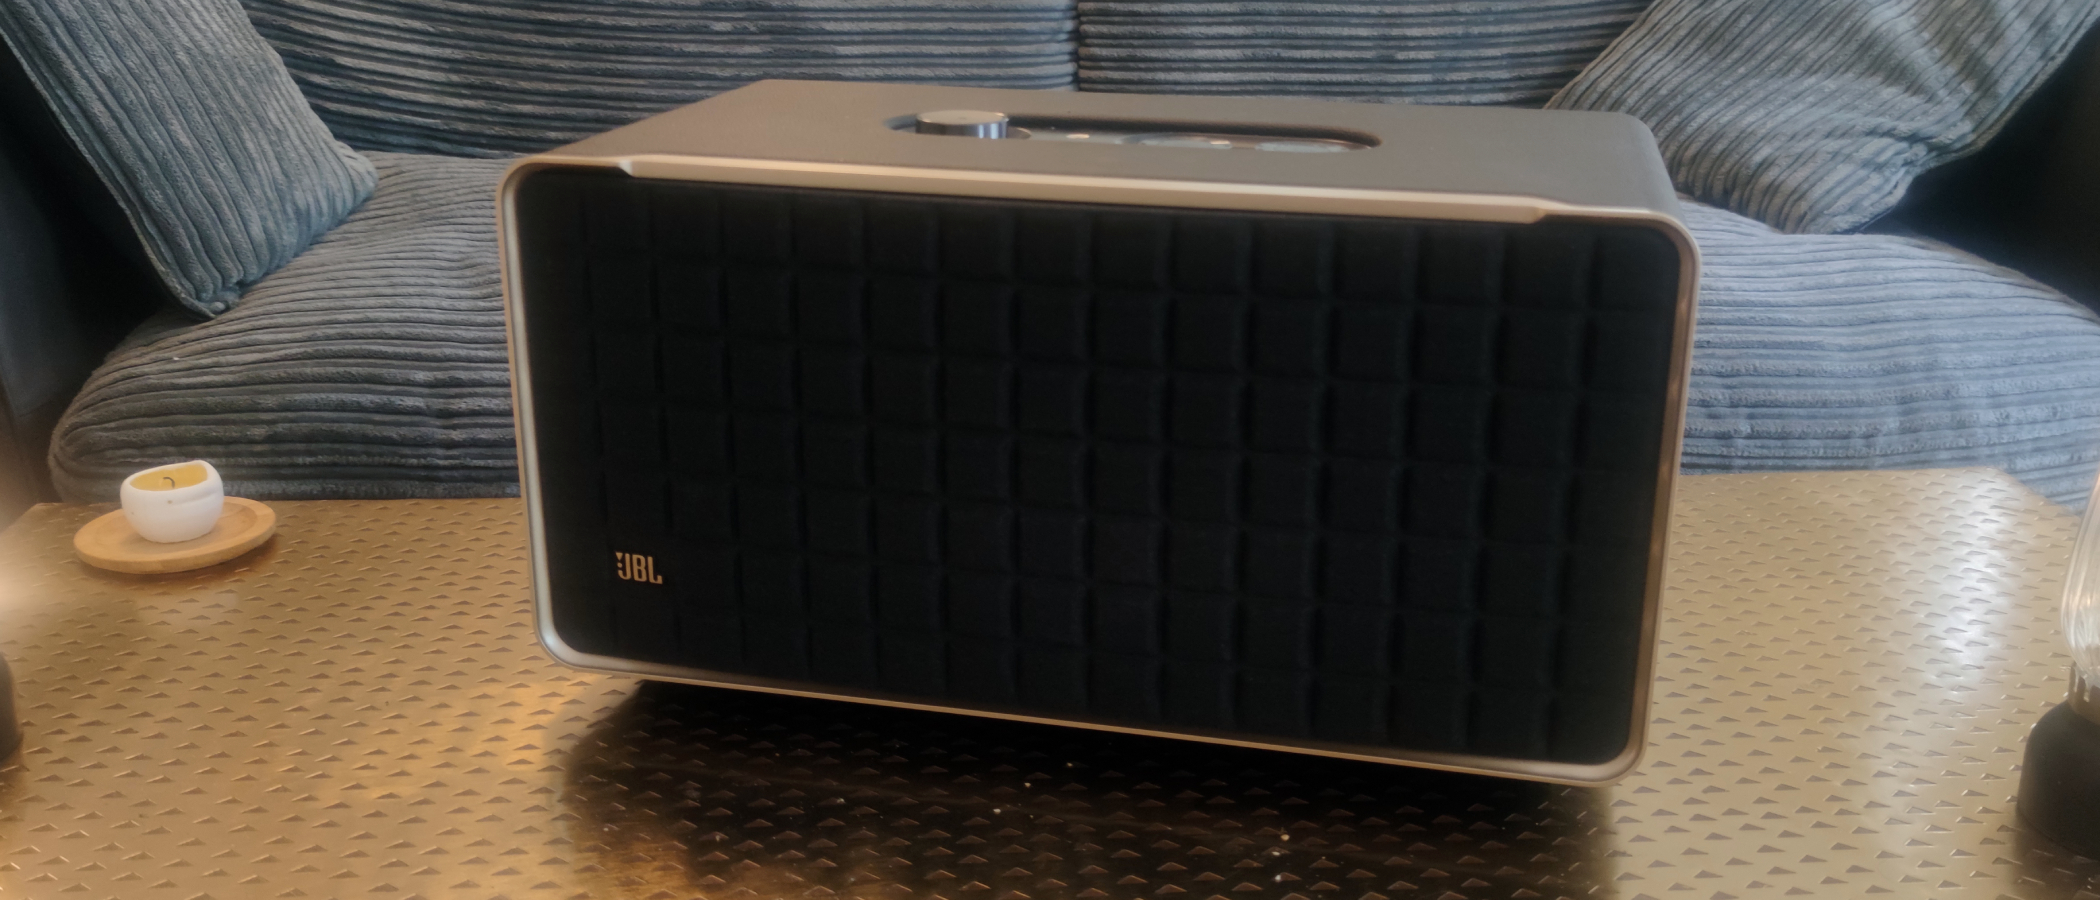 JBL Authentics 500 - Hi-Fidelity Smart Home Speaker with Retro Design